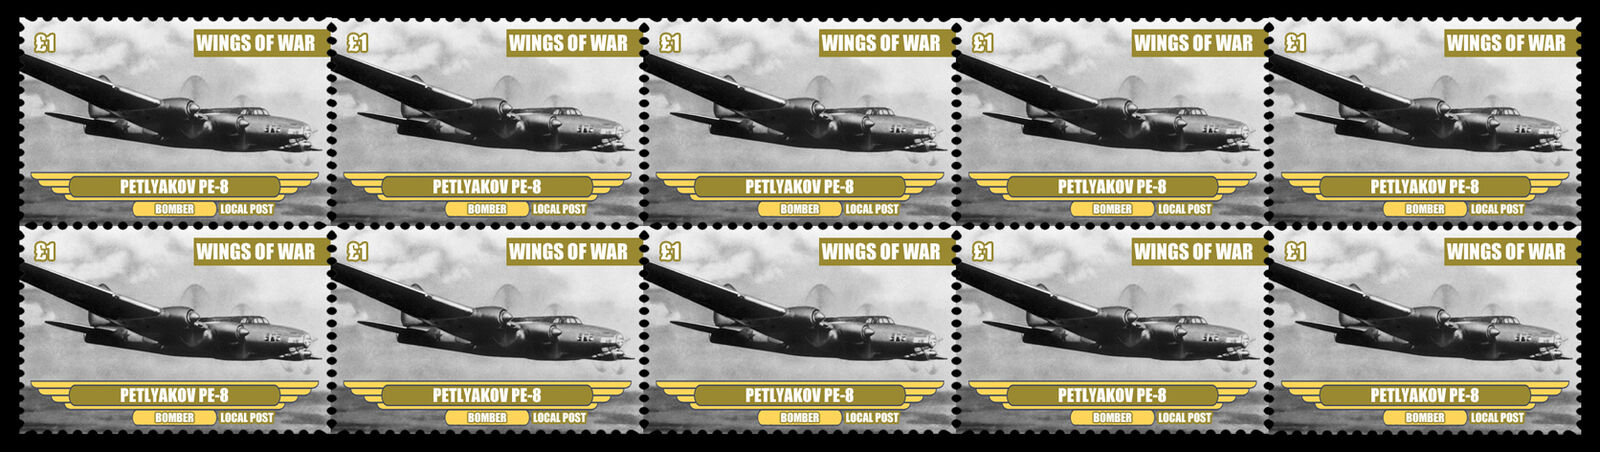 PETLYAKOV PE 8 BOMBER PLANE WORLD WAR 2 WINGS OF WAR STRIP OF 10 MINT STAMPS